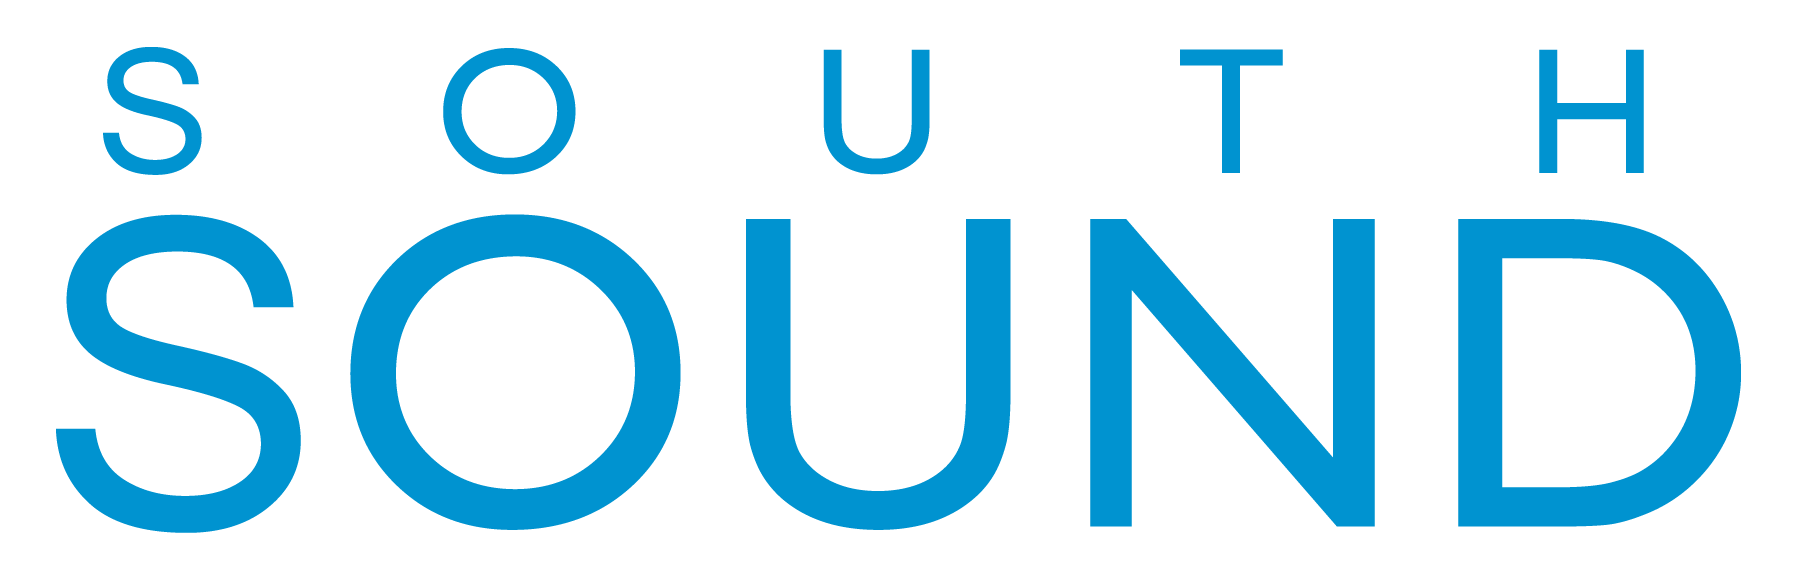 South Sound Magazine logo